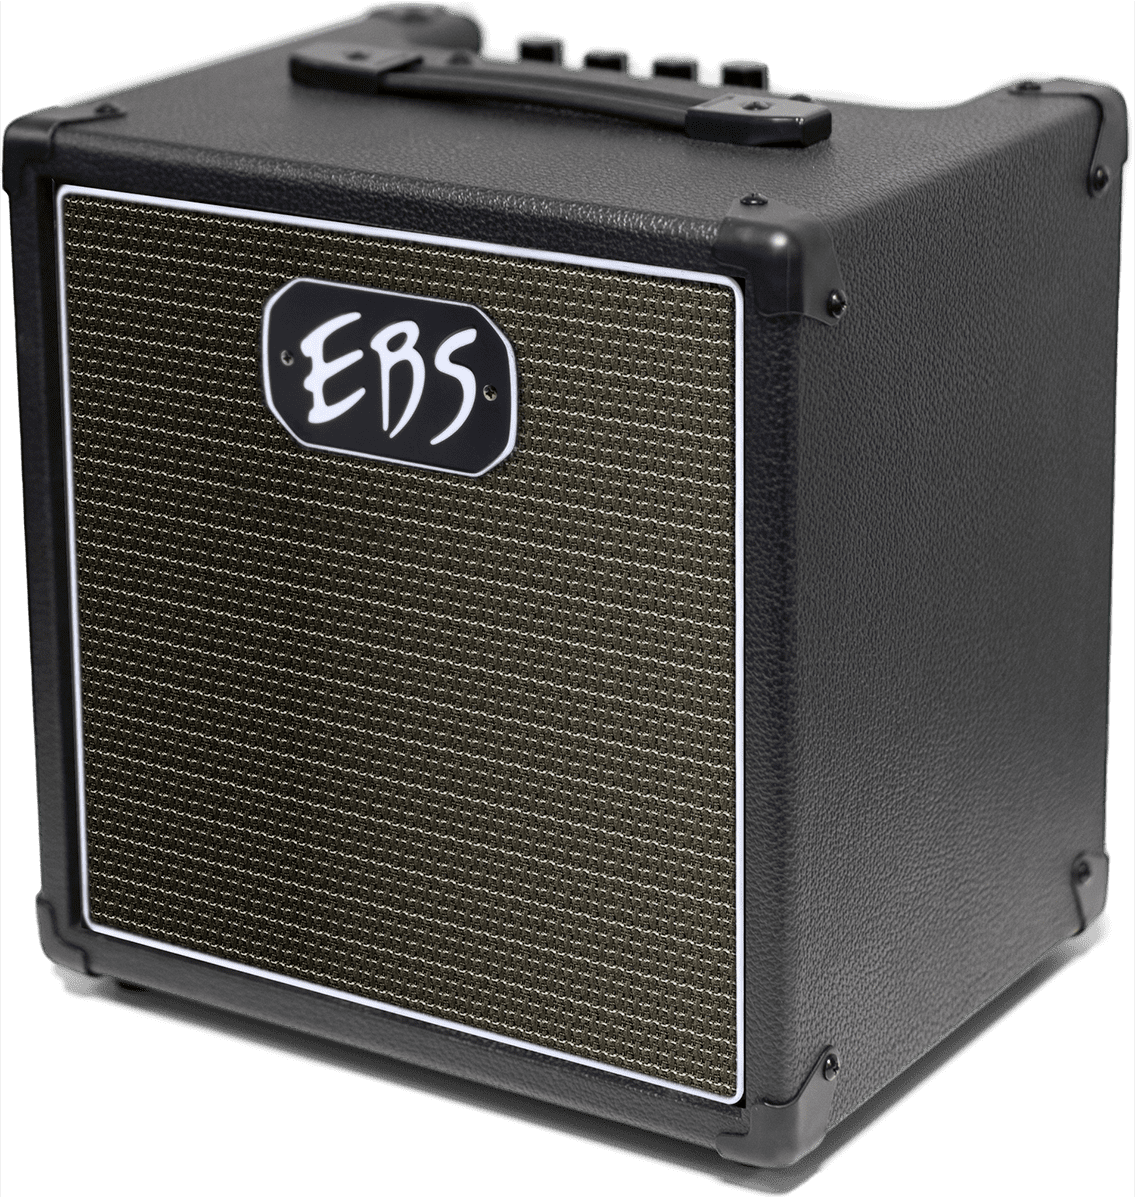 Ebs Session 30 Mk3 1x8 30 W - Combo amplificador para bajo - Main picture